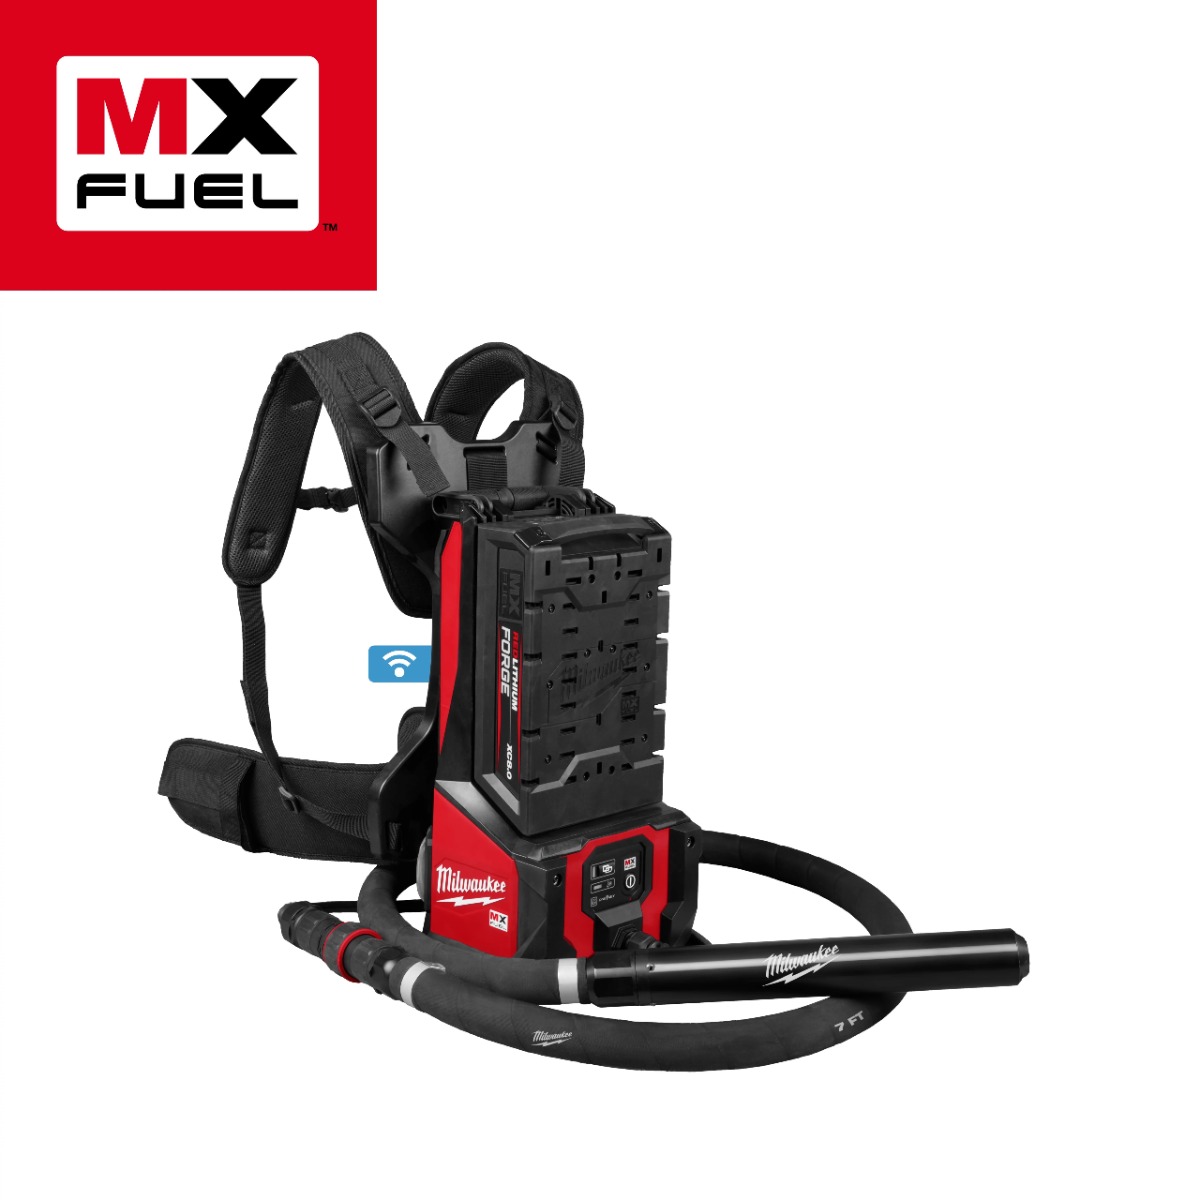 MX FUEL™ High Cycle Concrete Vibrator Kit 